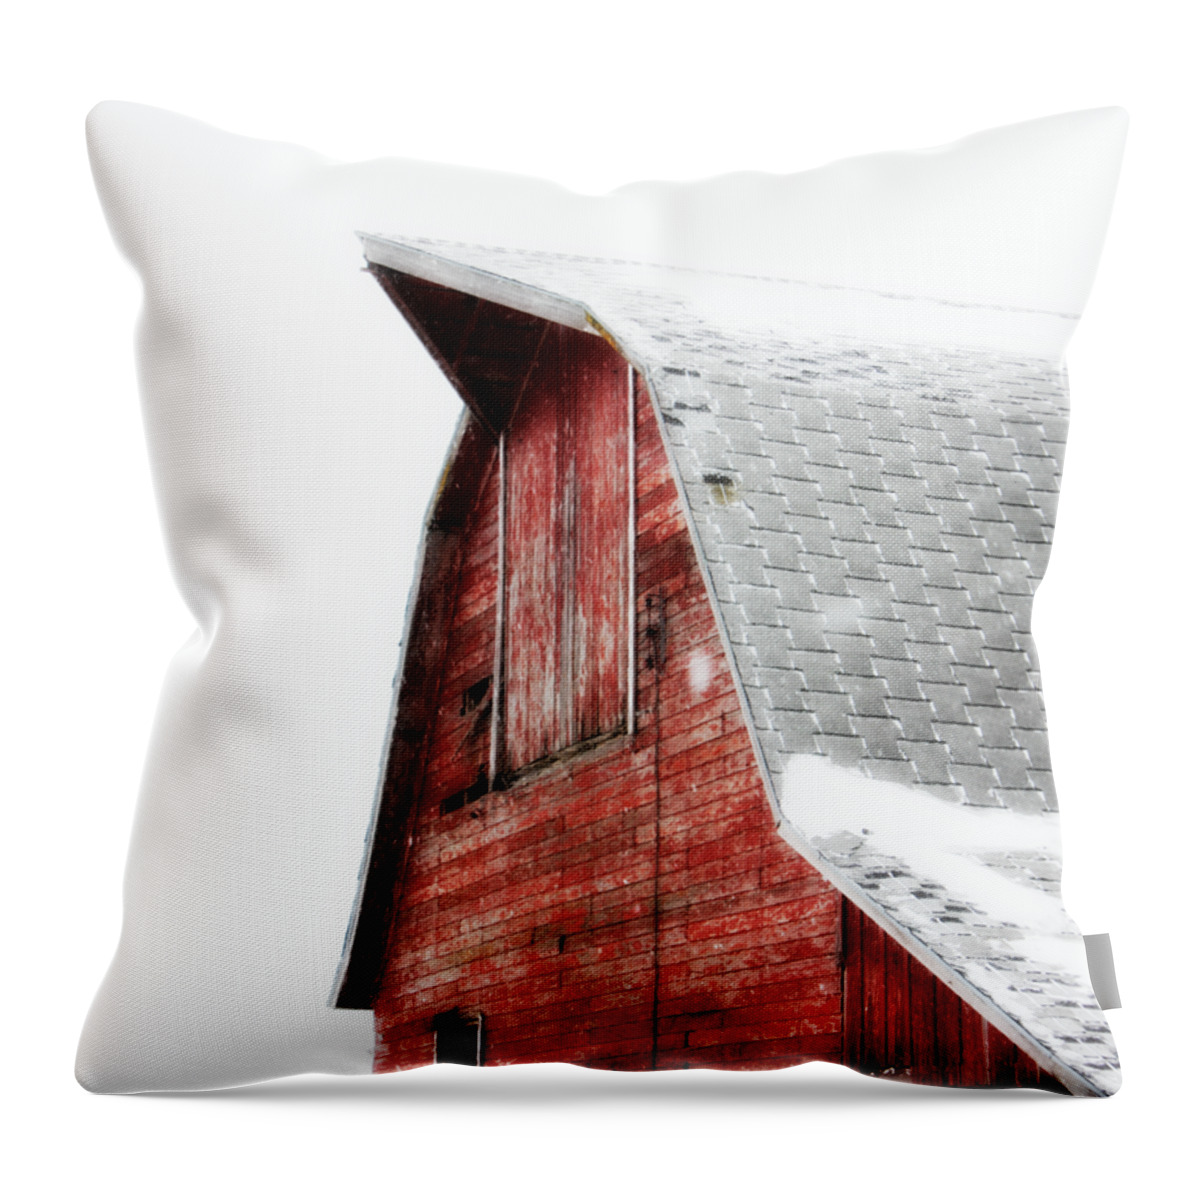 Barn Addict Throw Pillow featuring the photograph HIgh Point by Julie Hamilton